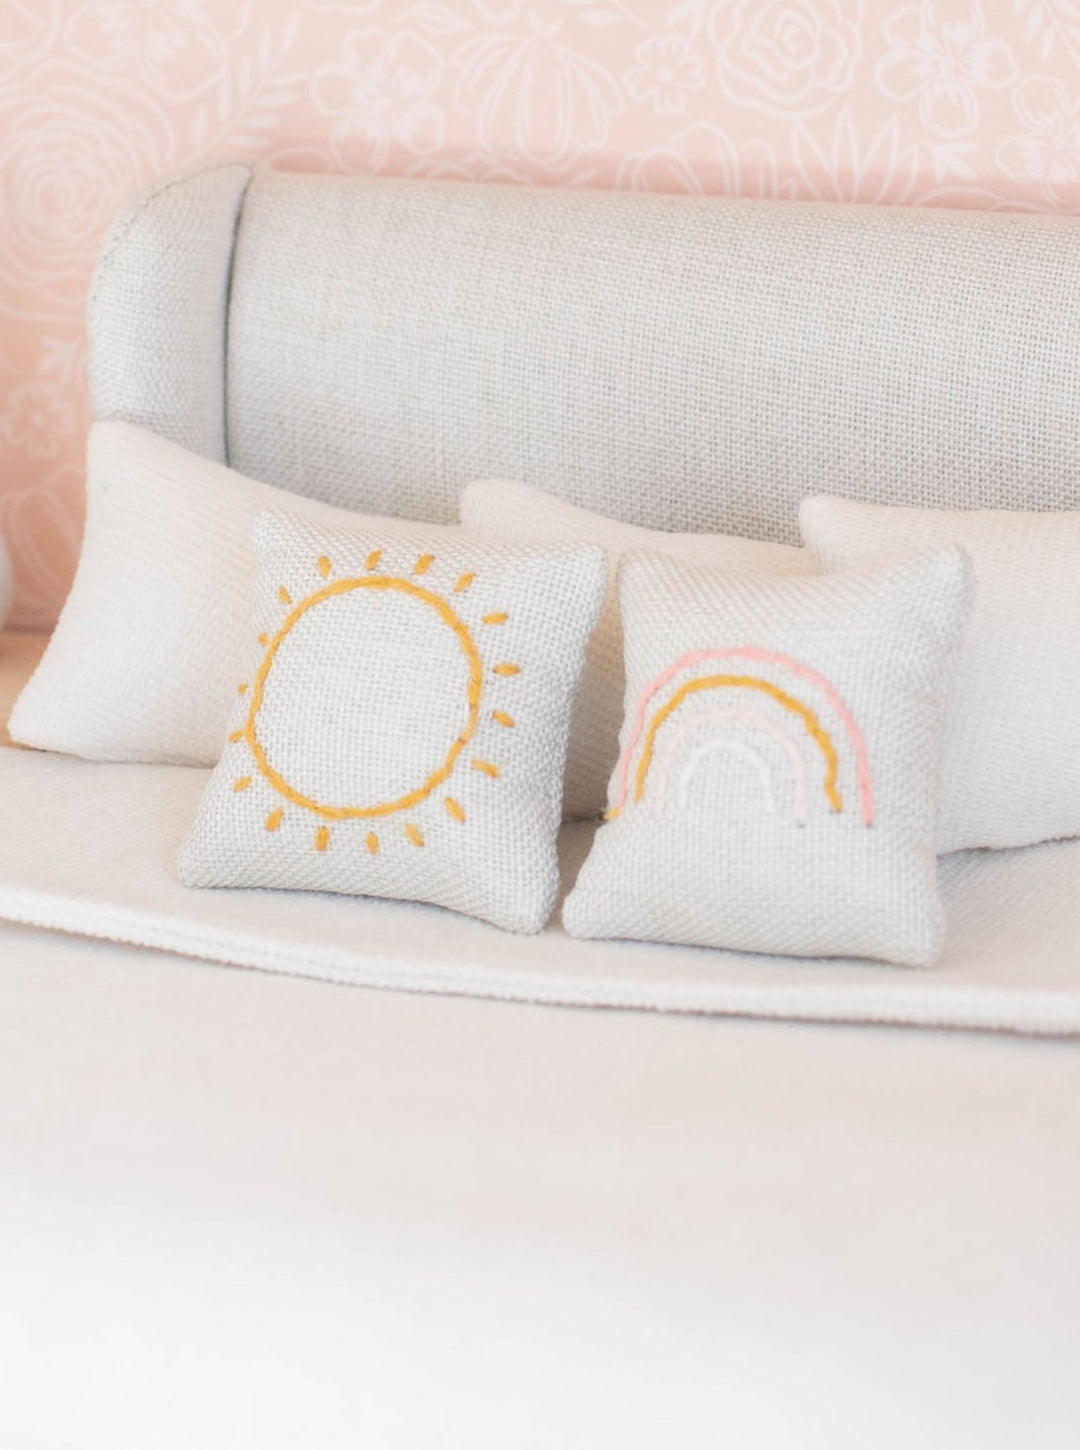 Rainbow + Sunshine Pillow Set